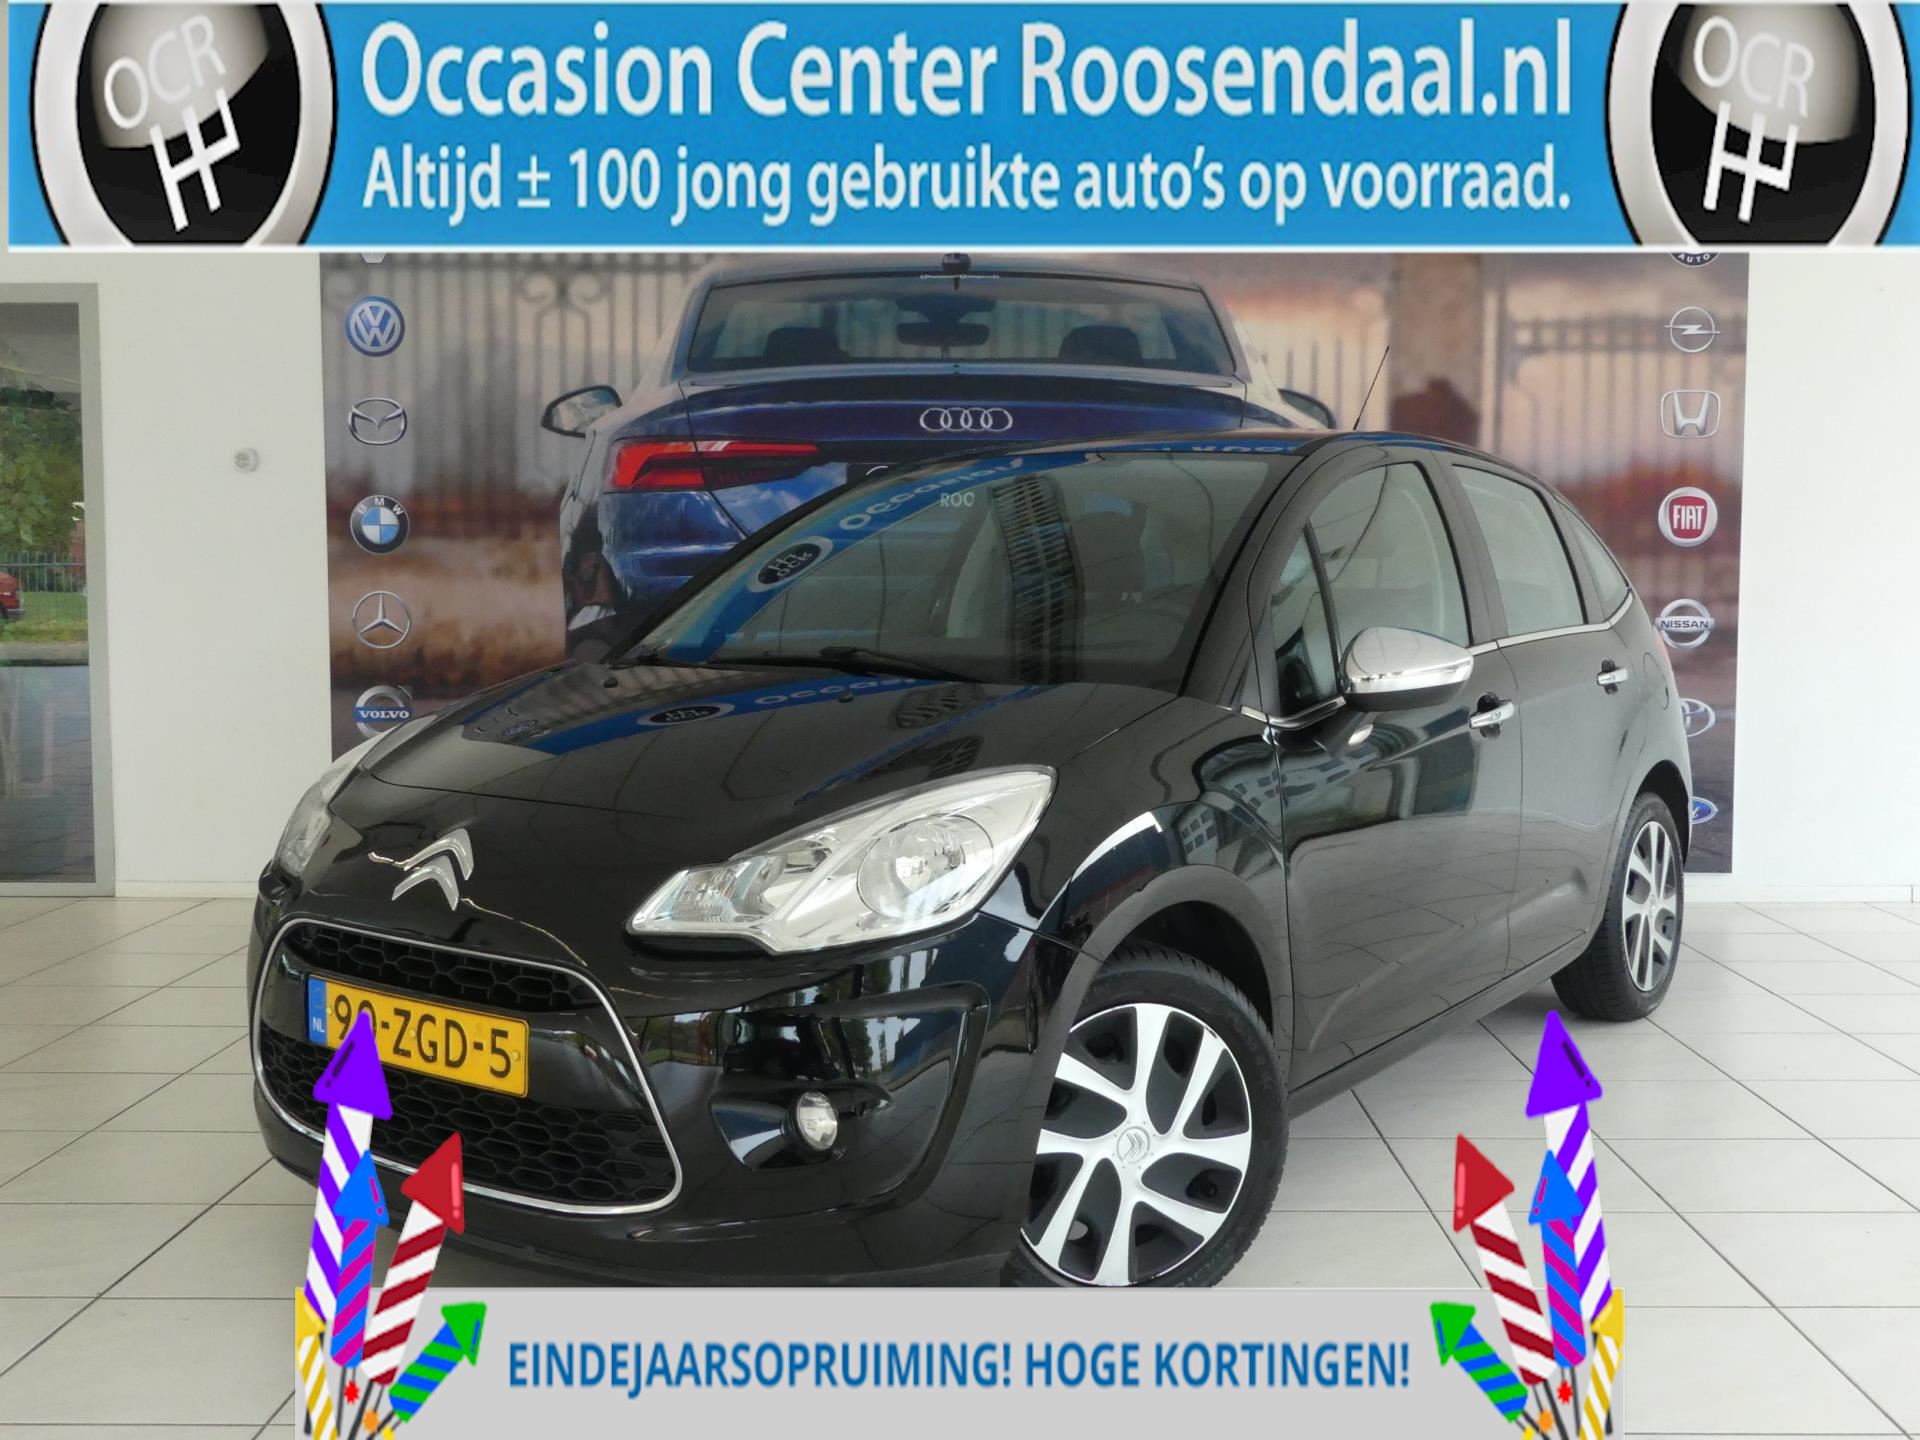 Citroen C3 occasion - Occasion Center Roosendaal